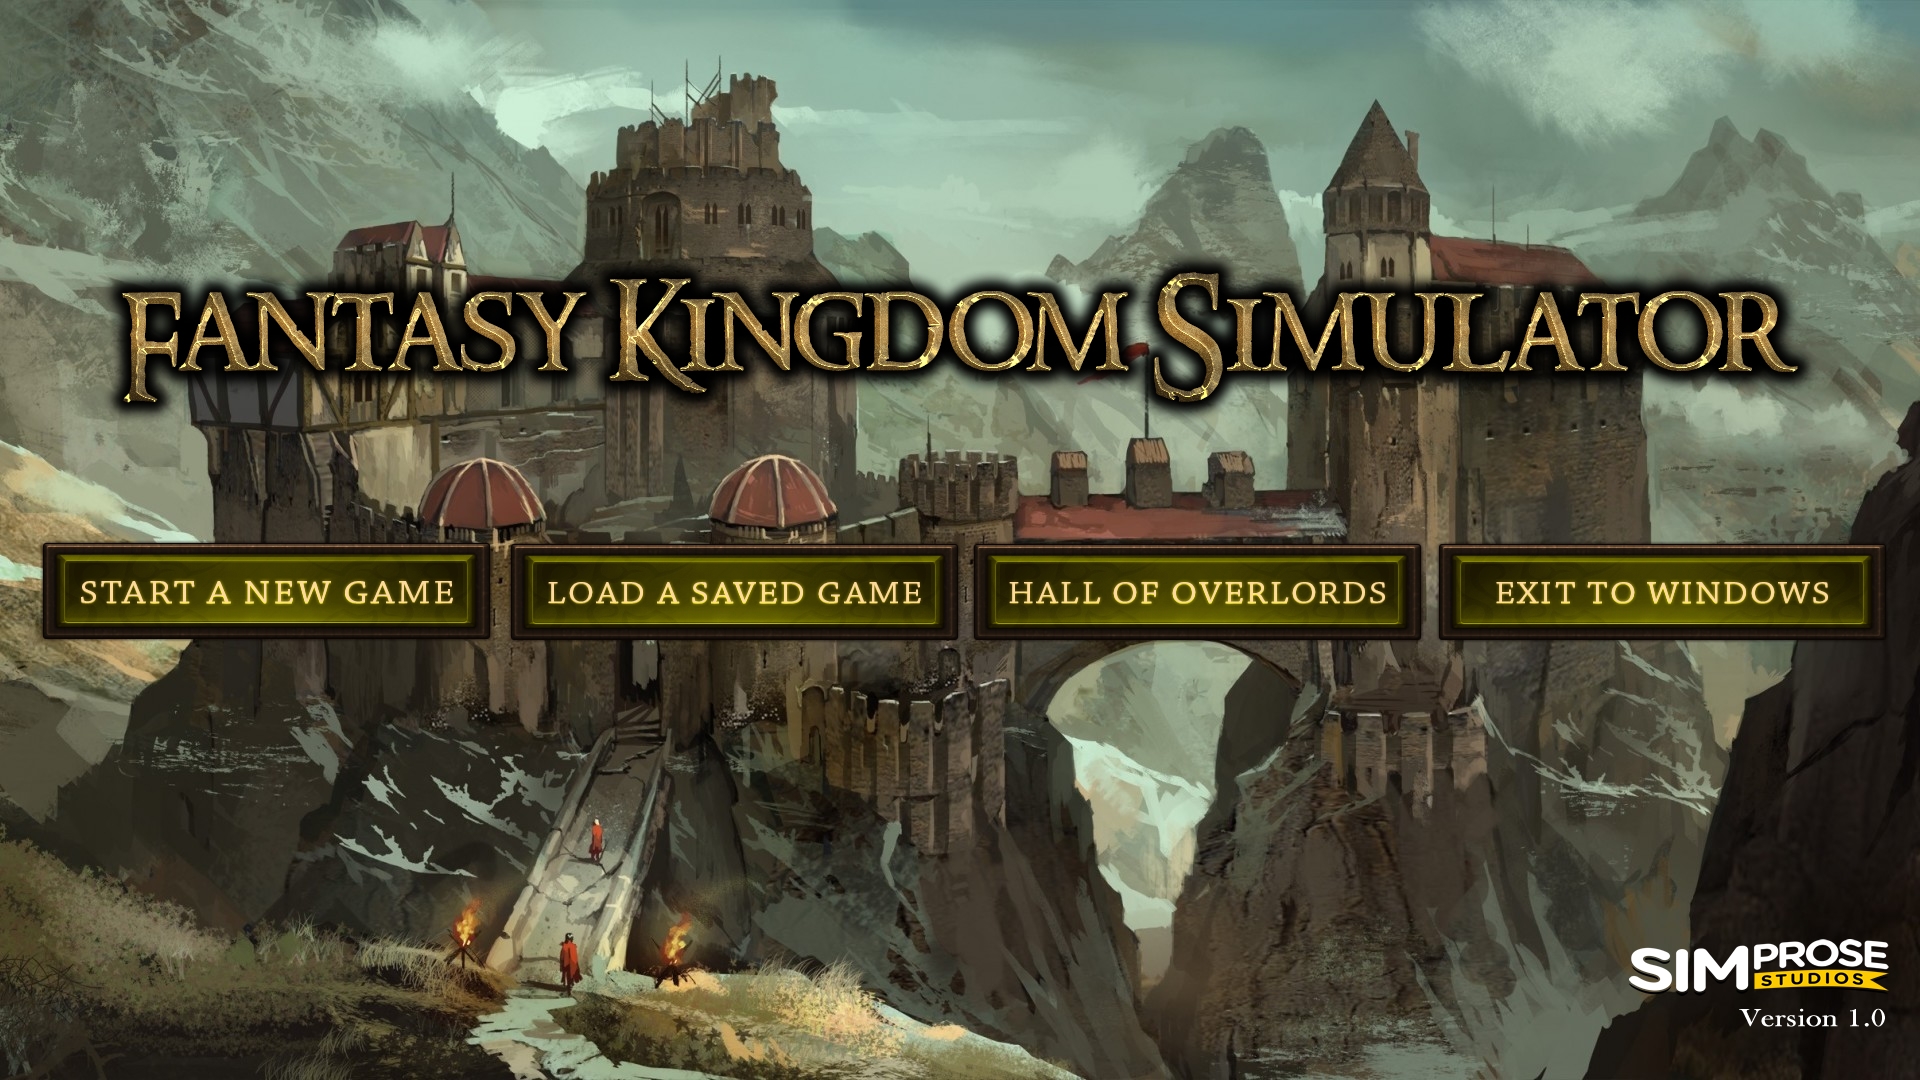 Fantasy Kingdom Simulator English Language only Steam CD Key, $0.33